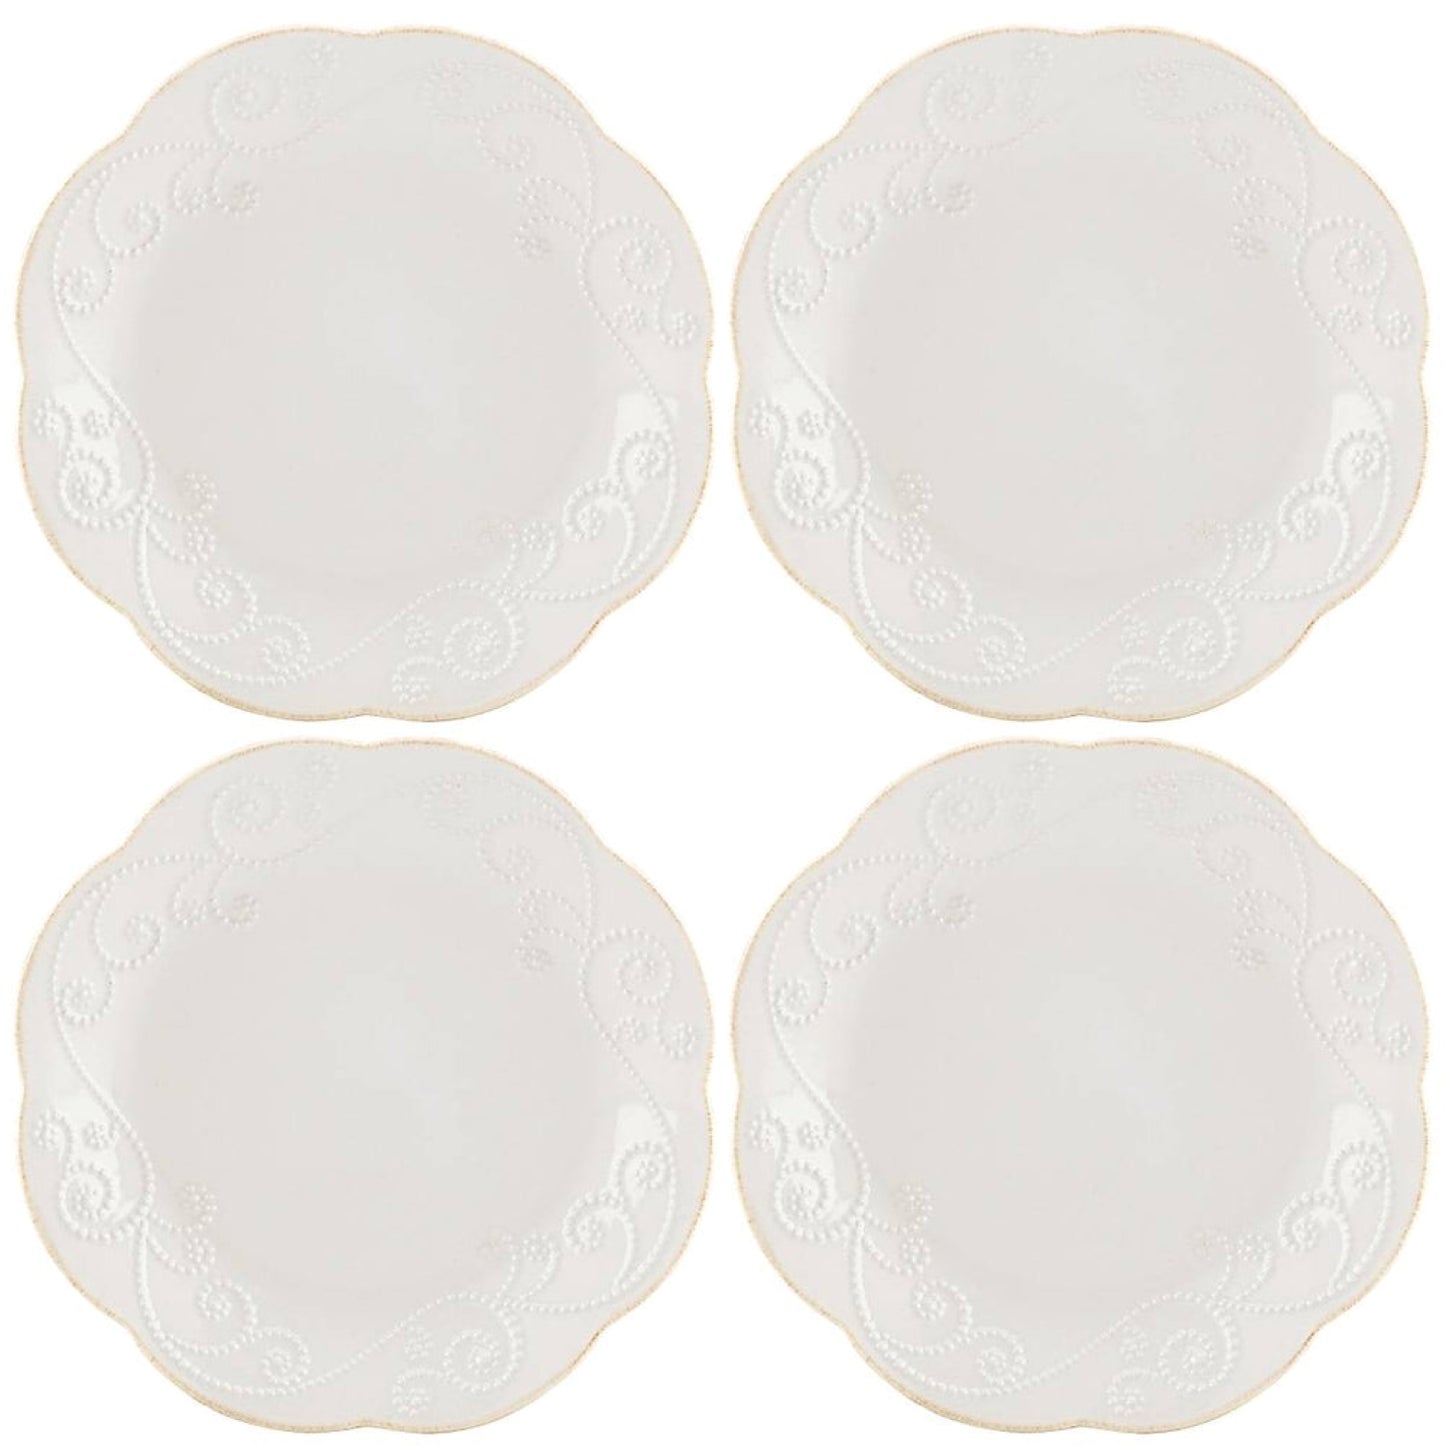 Lenox French Perle White Dessert Plates, Set of 4